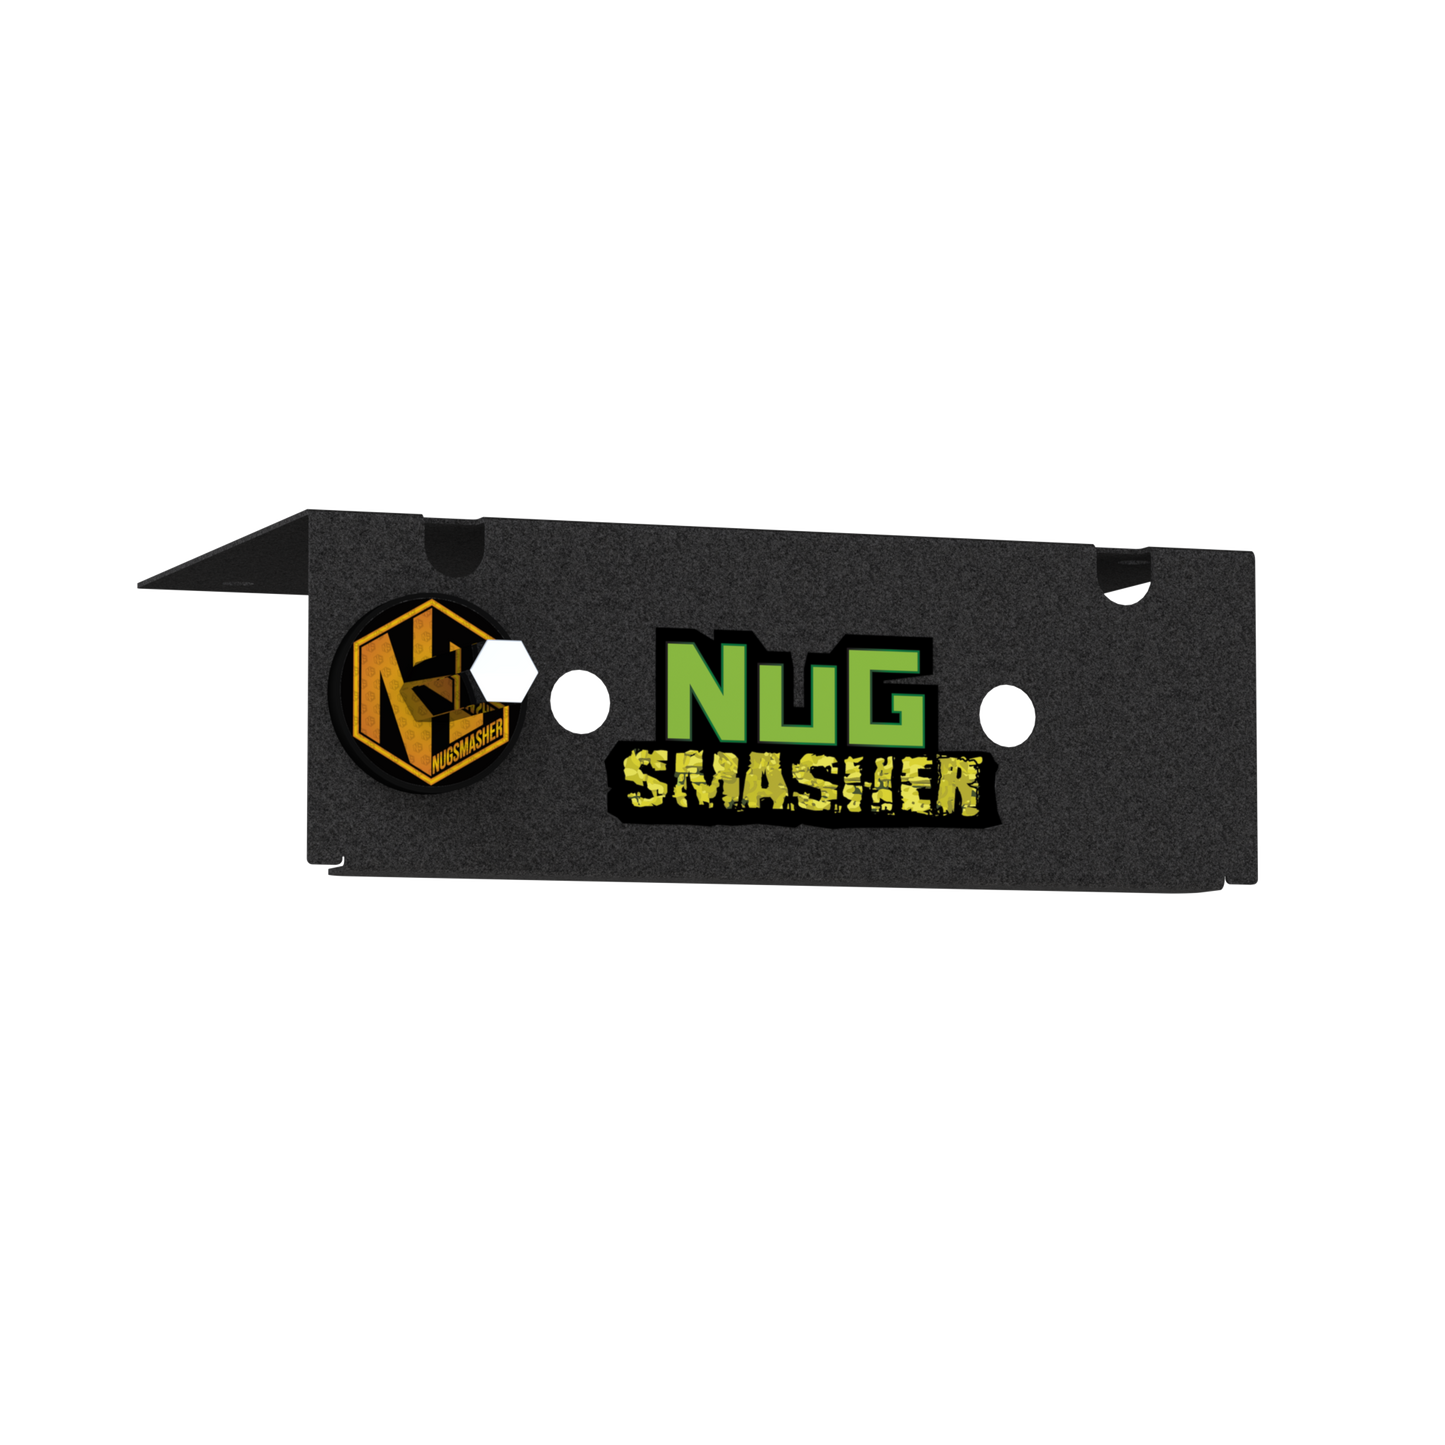 NugSmasher Magnet Shield